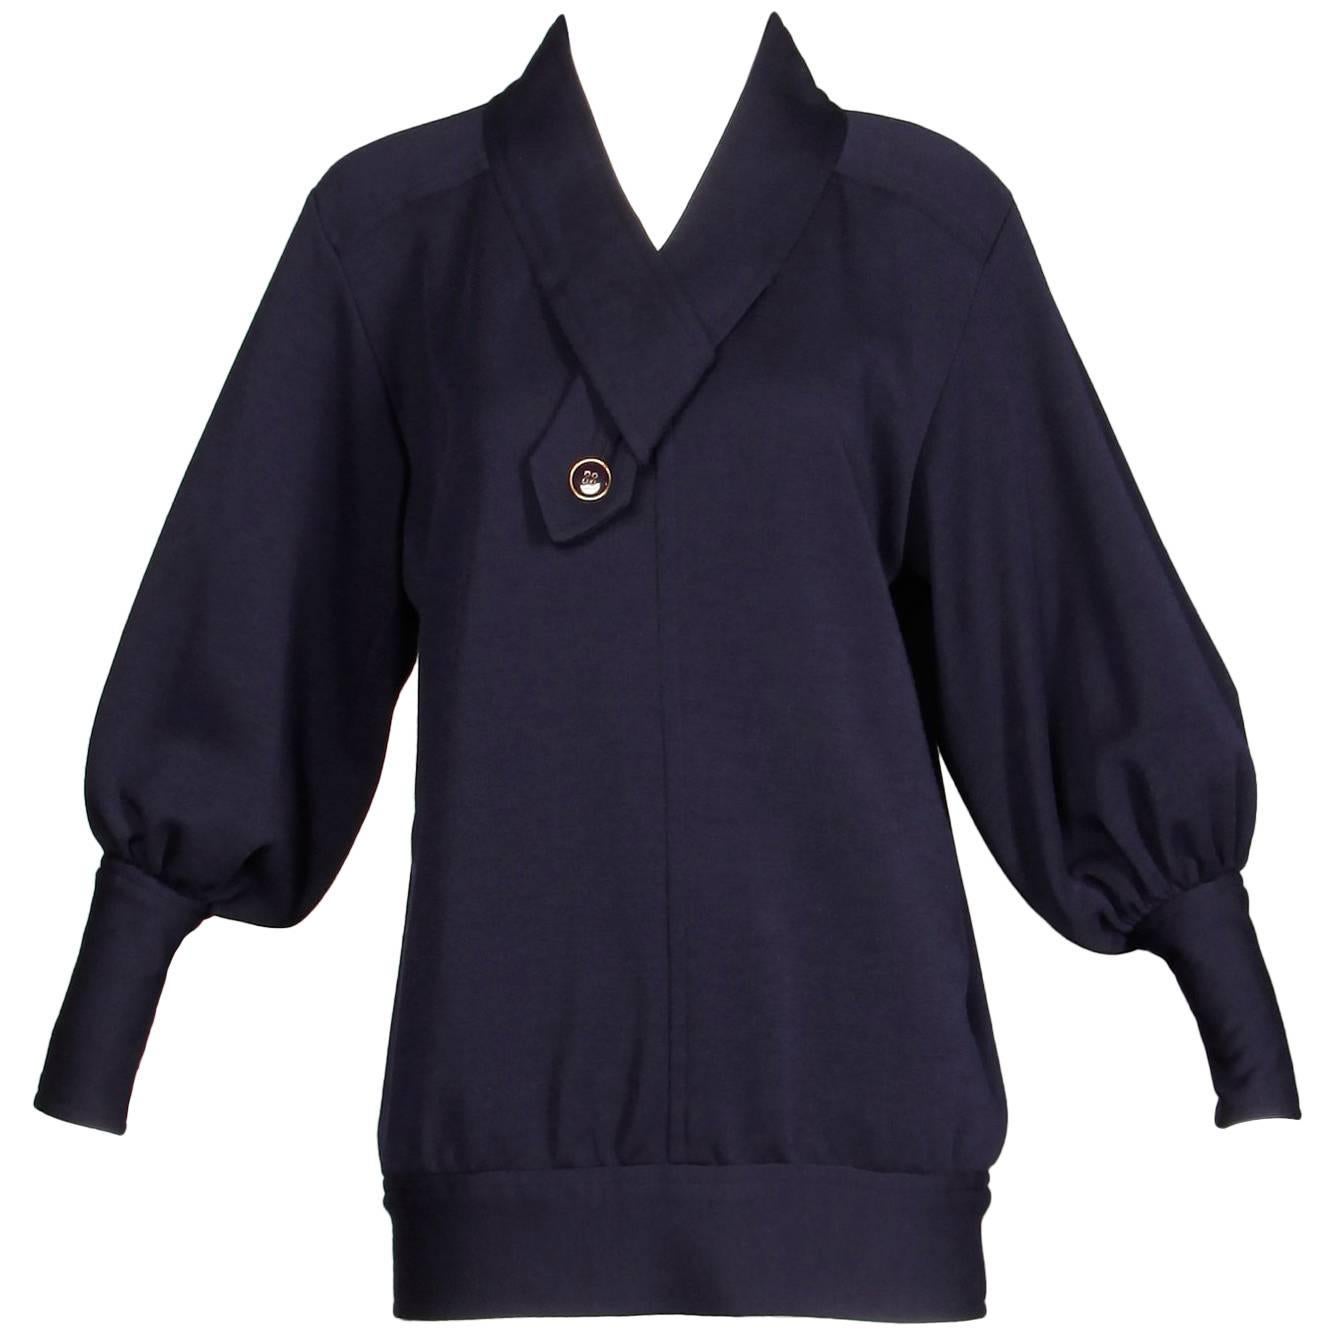 Yves Saint Laurent YSL Vintage Navy Blue Wool Knit Sweater or Jumper Top